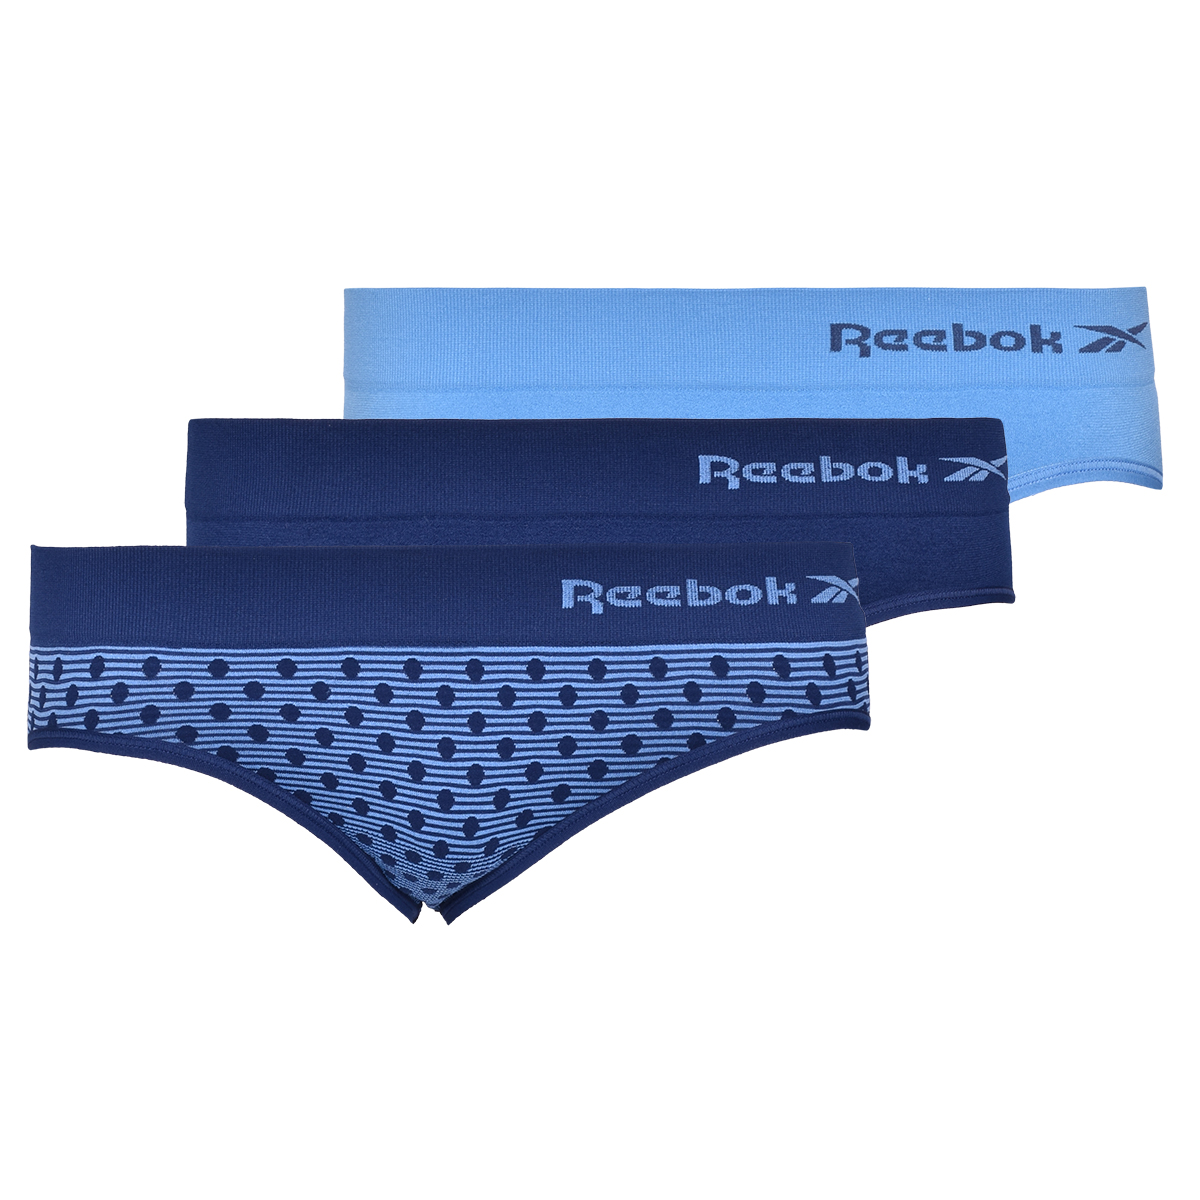 Комплект трусов Reebok для женщин, U4_F9789_RBK, голубой, M, 3 шт